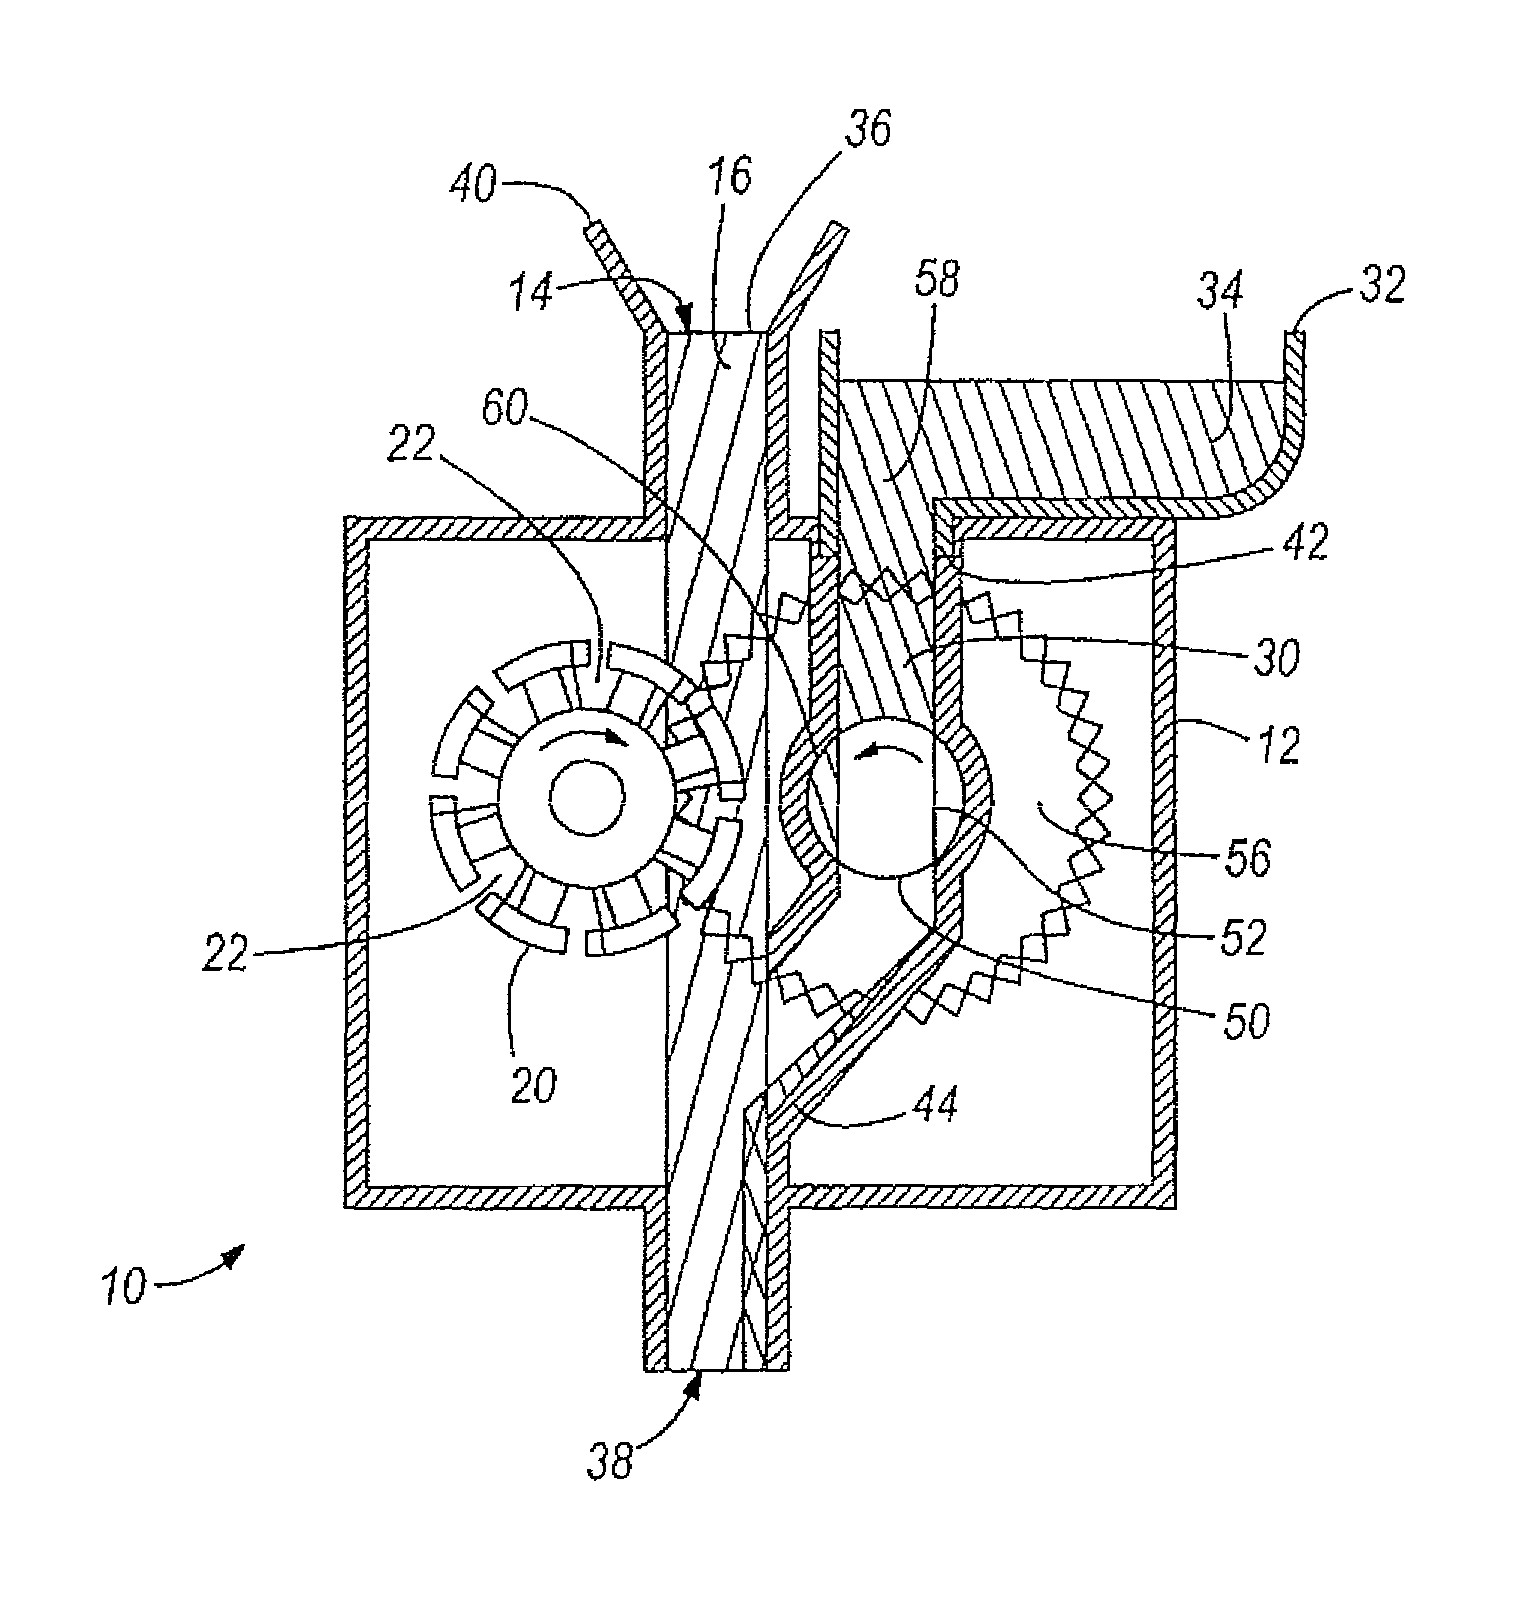 Fluid dispensing apparatus and method